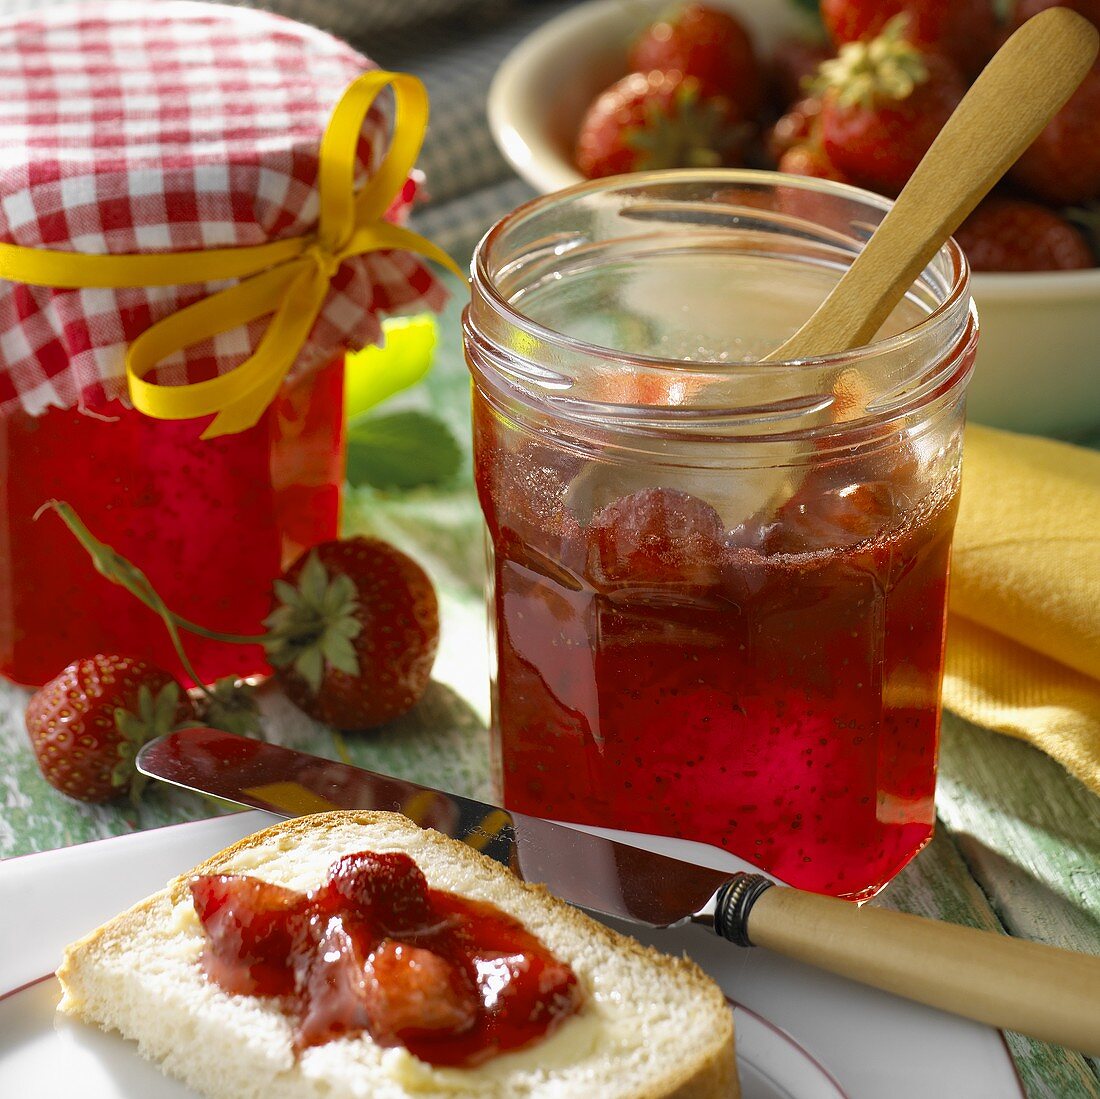 Strawberry jam in preserving jar